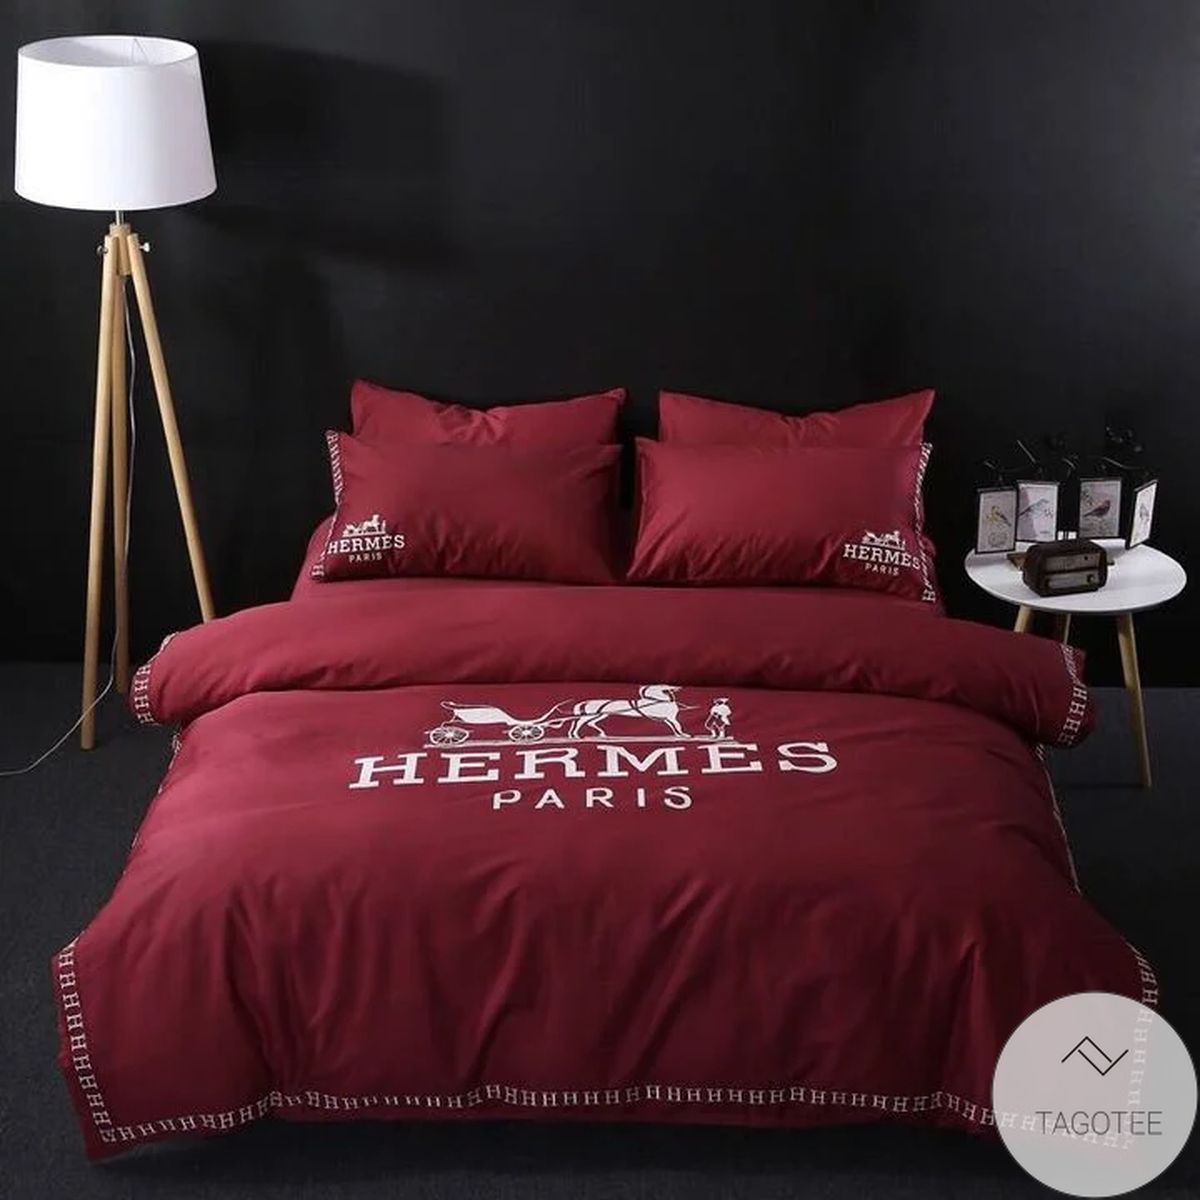 Hermes Paris Luxury Brand Bedding Set